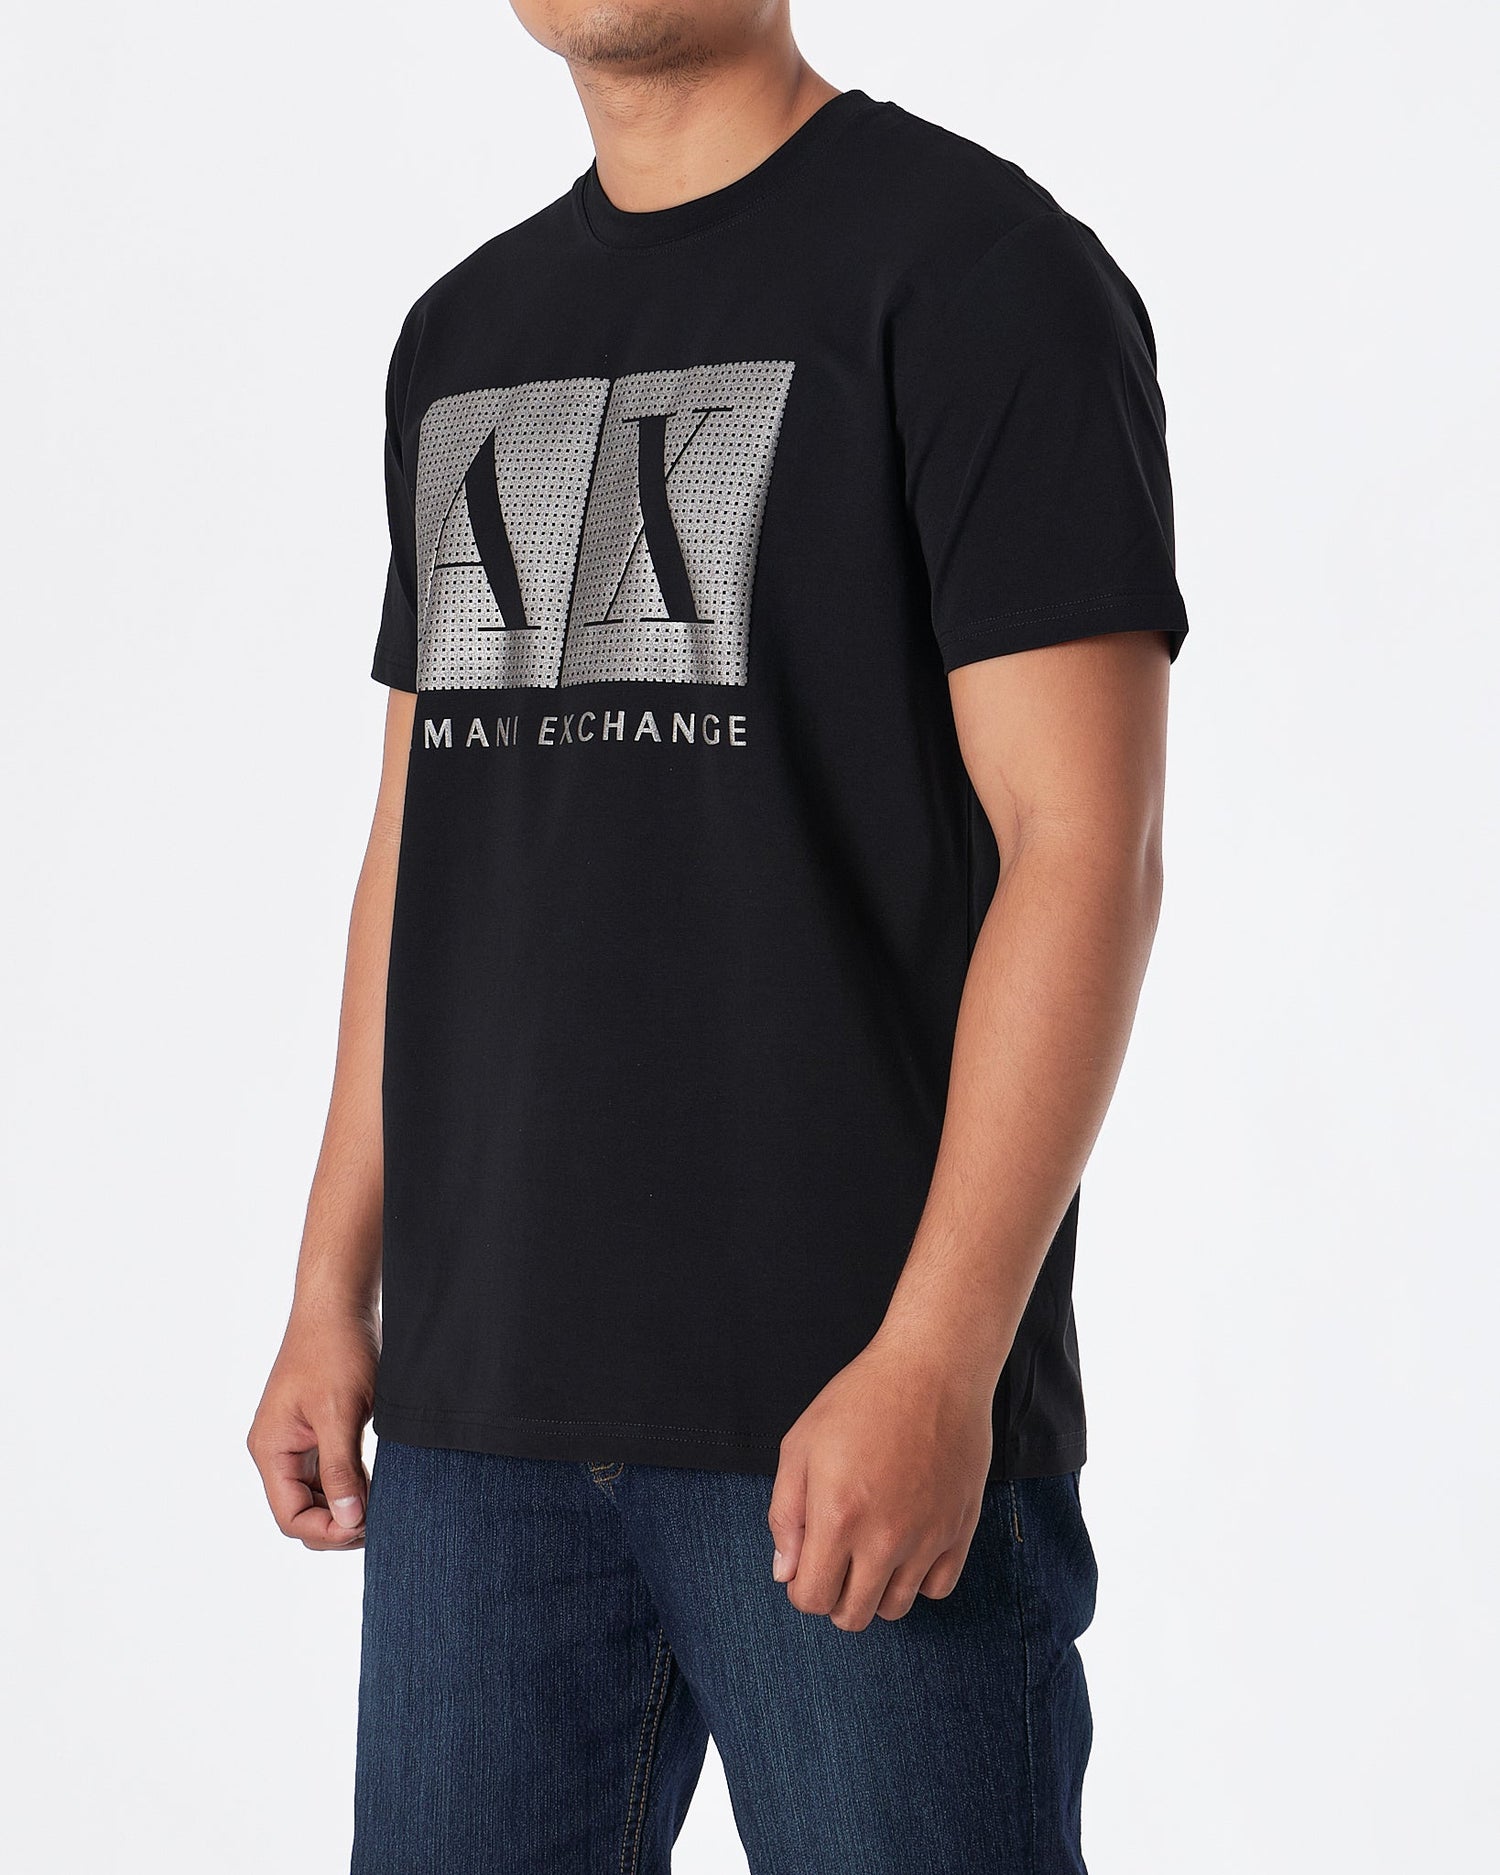 MOI OUTFIT-ARM Exchange Men Black T-Shirt 17.90